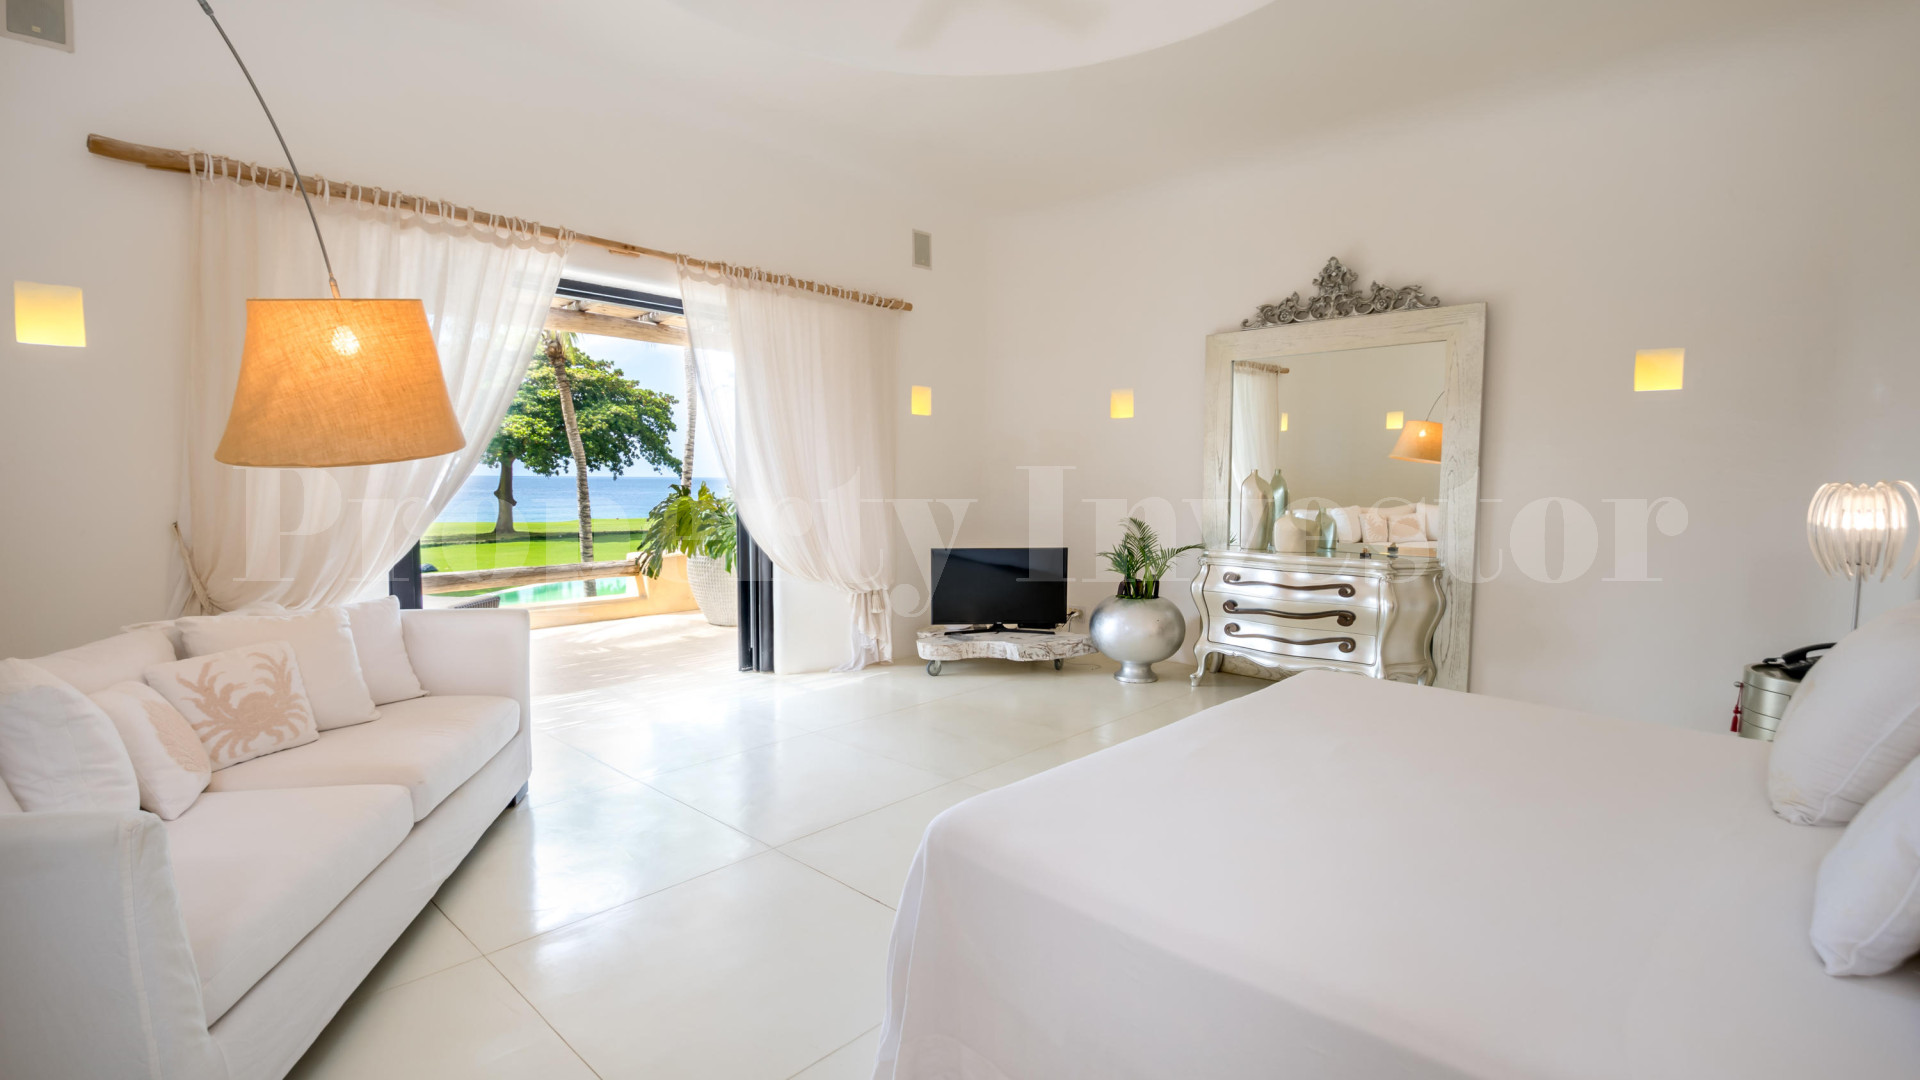 Unique 5 Bedroom "Organic" Luxury Oceanfront Villa with Amazing Ocean & Golf Views for Sale in Casa de Campo, the Dominican Republic